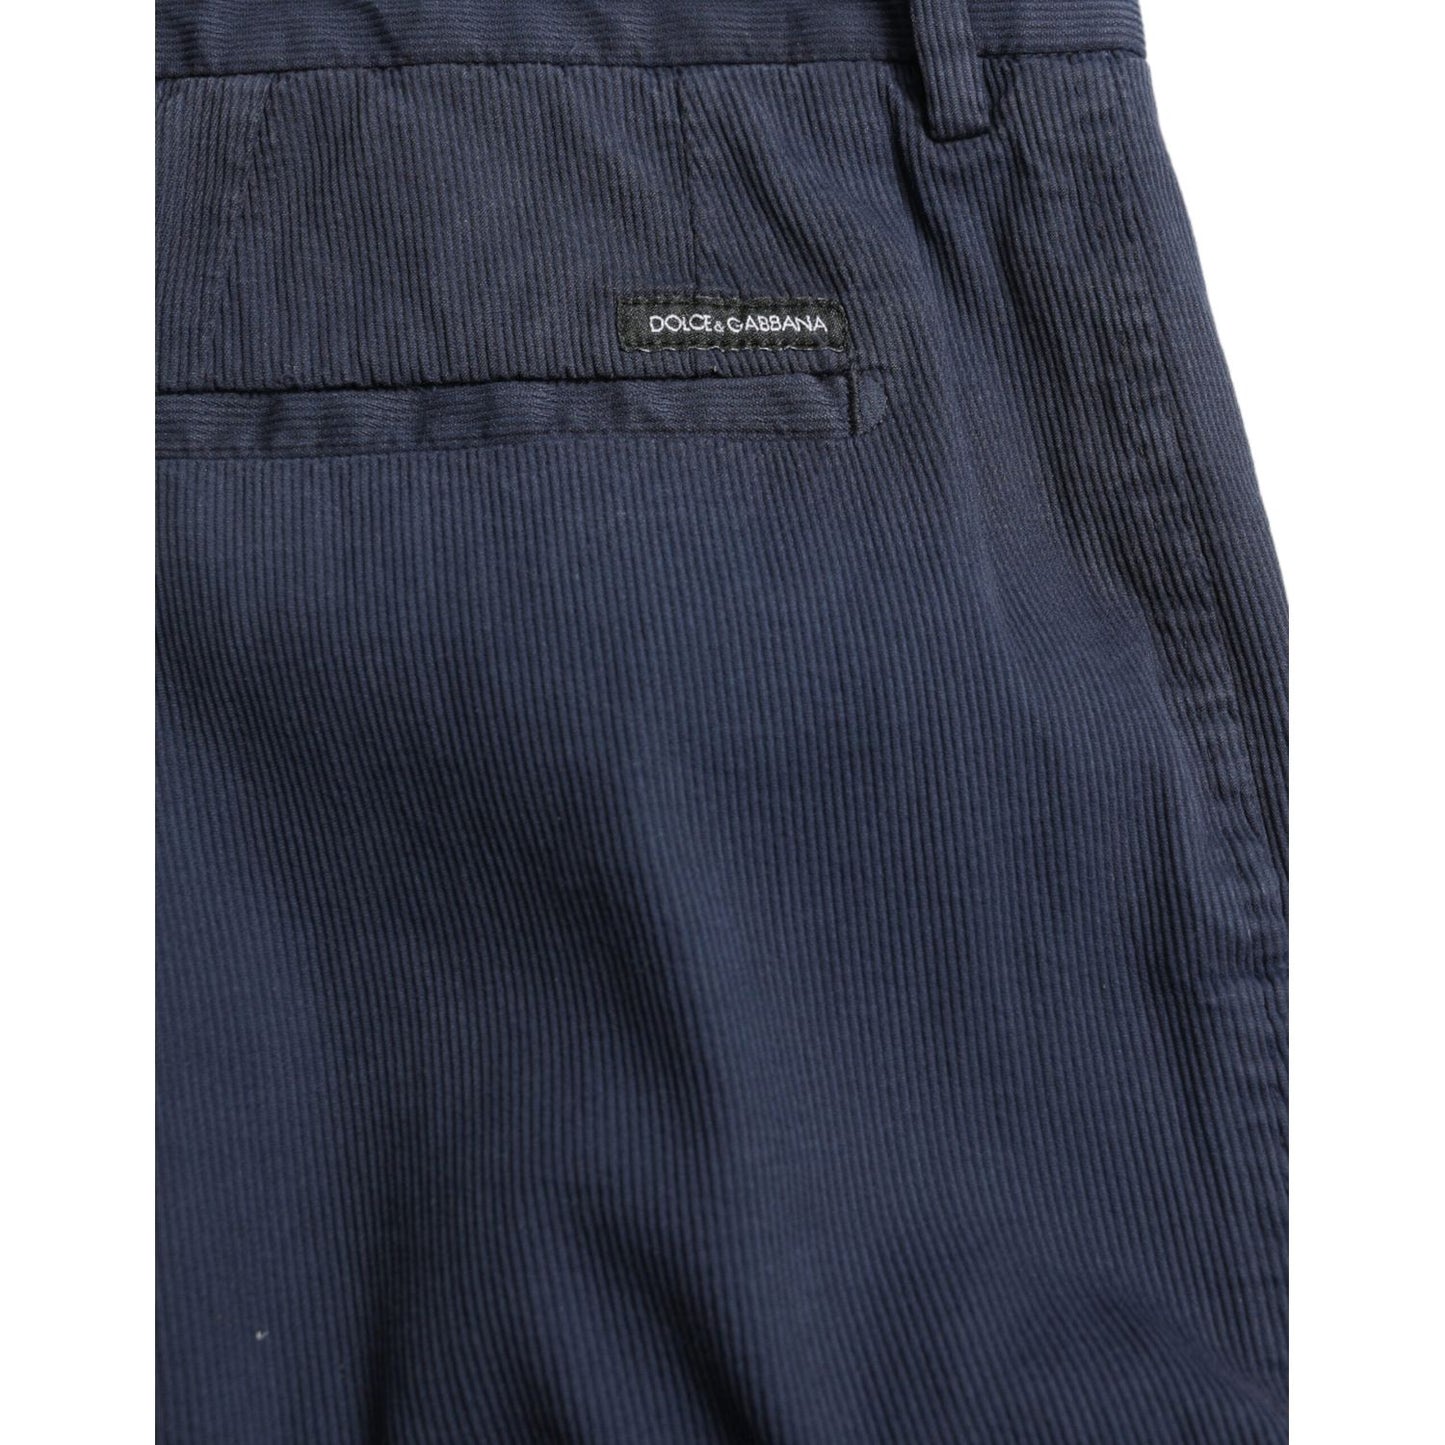 Dolce & Gabbana Elegant Dark Blue Skinny Dress Pants dark-blue-cotton-stretch-slim-fit-dress-pants